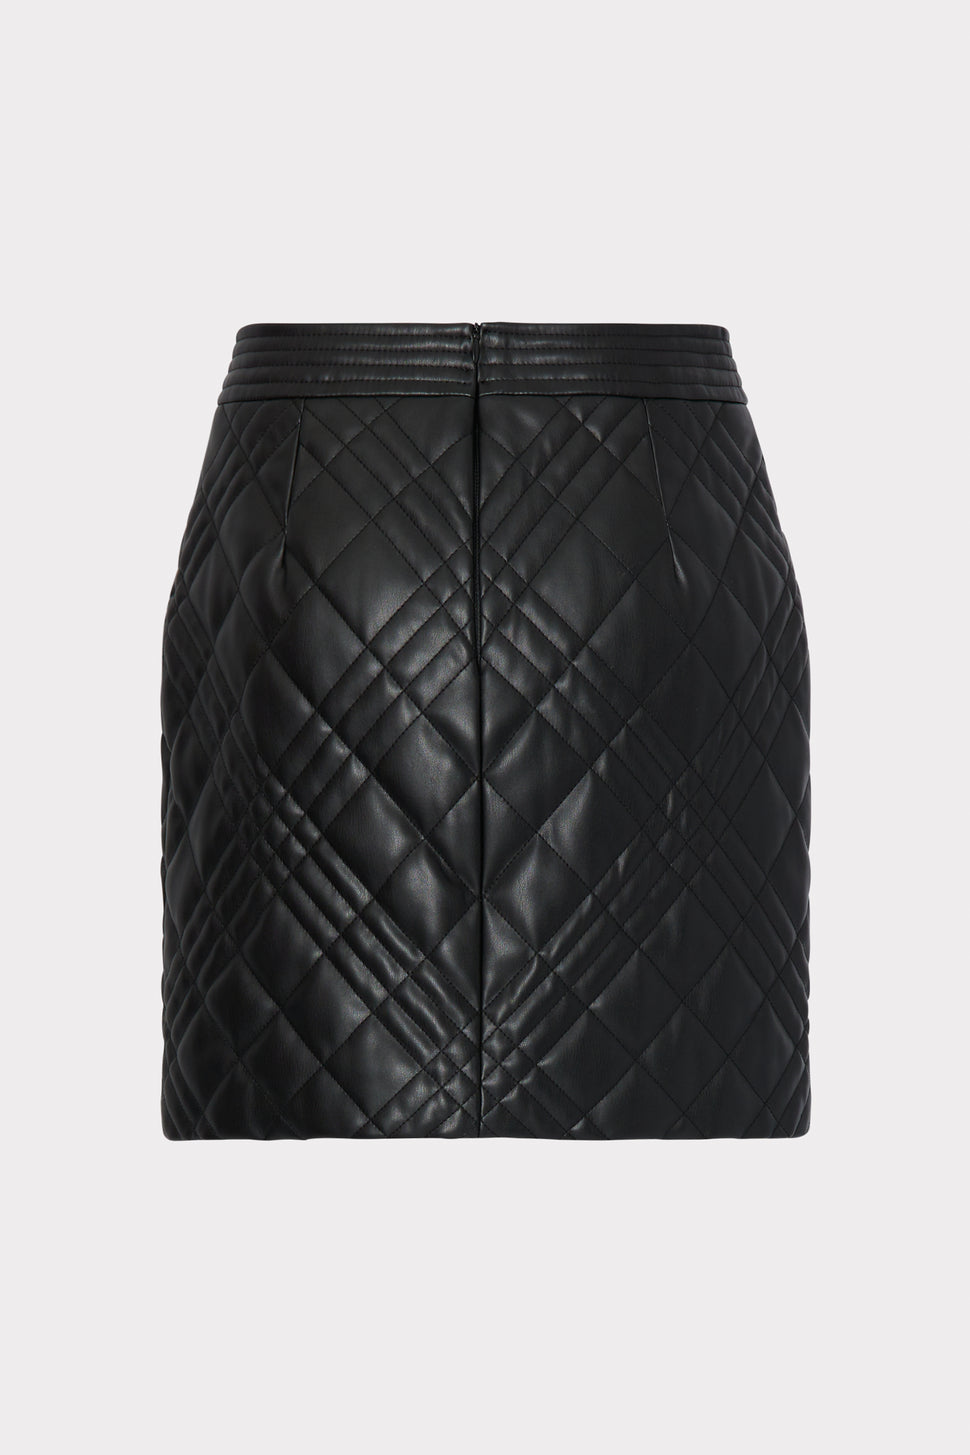 Louis Vuitton Pinstripe Leather Zip-Up Mini Skirt BLACK. Size 38